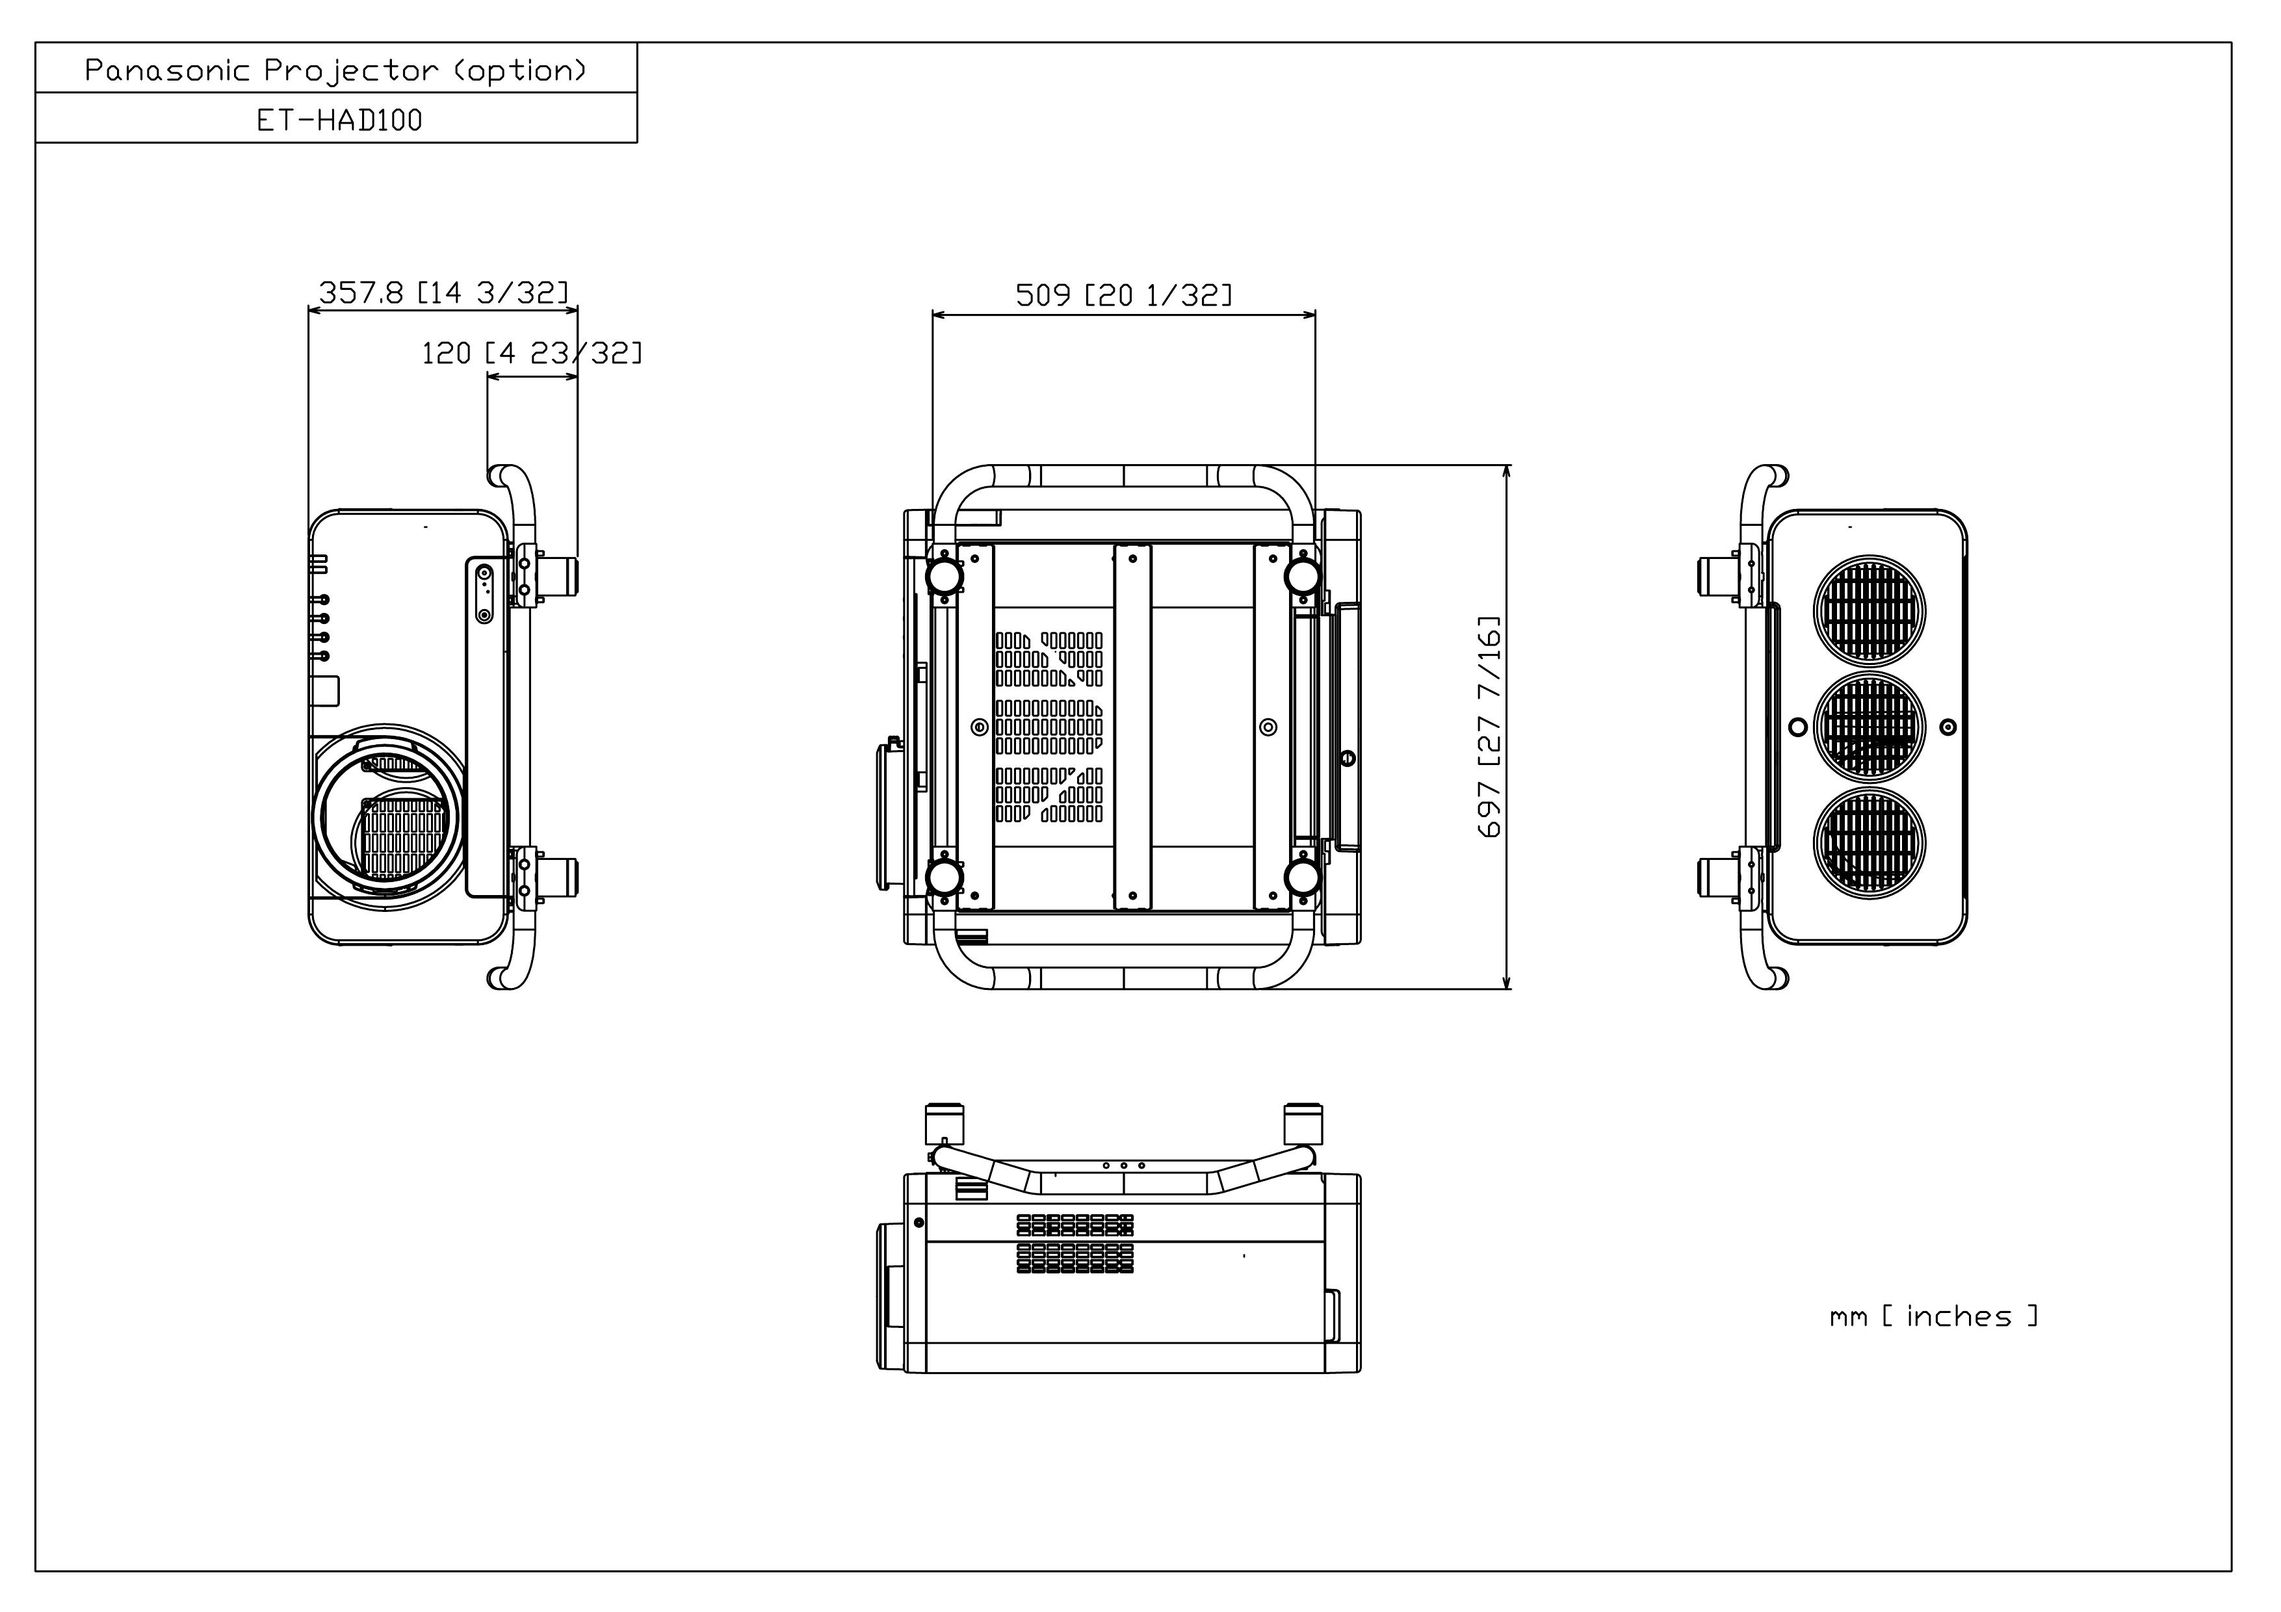 Panasonic ET-HAD100 Projector User Manual